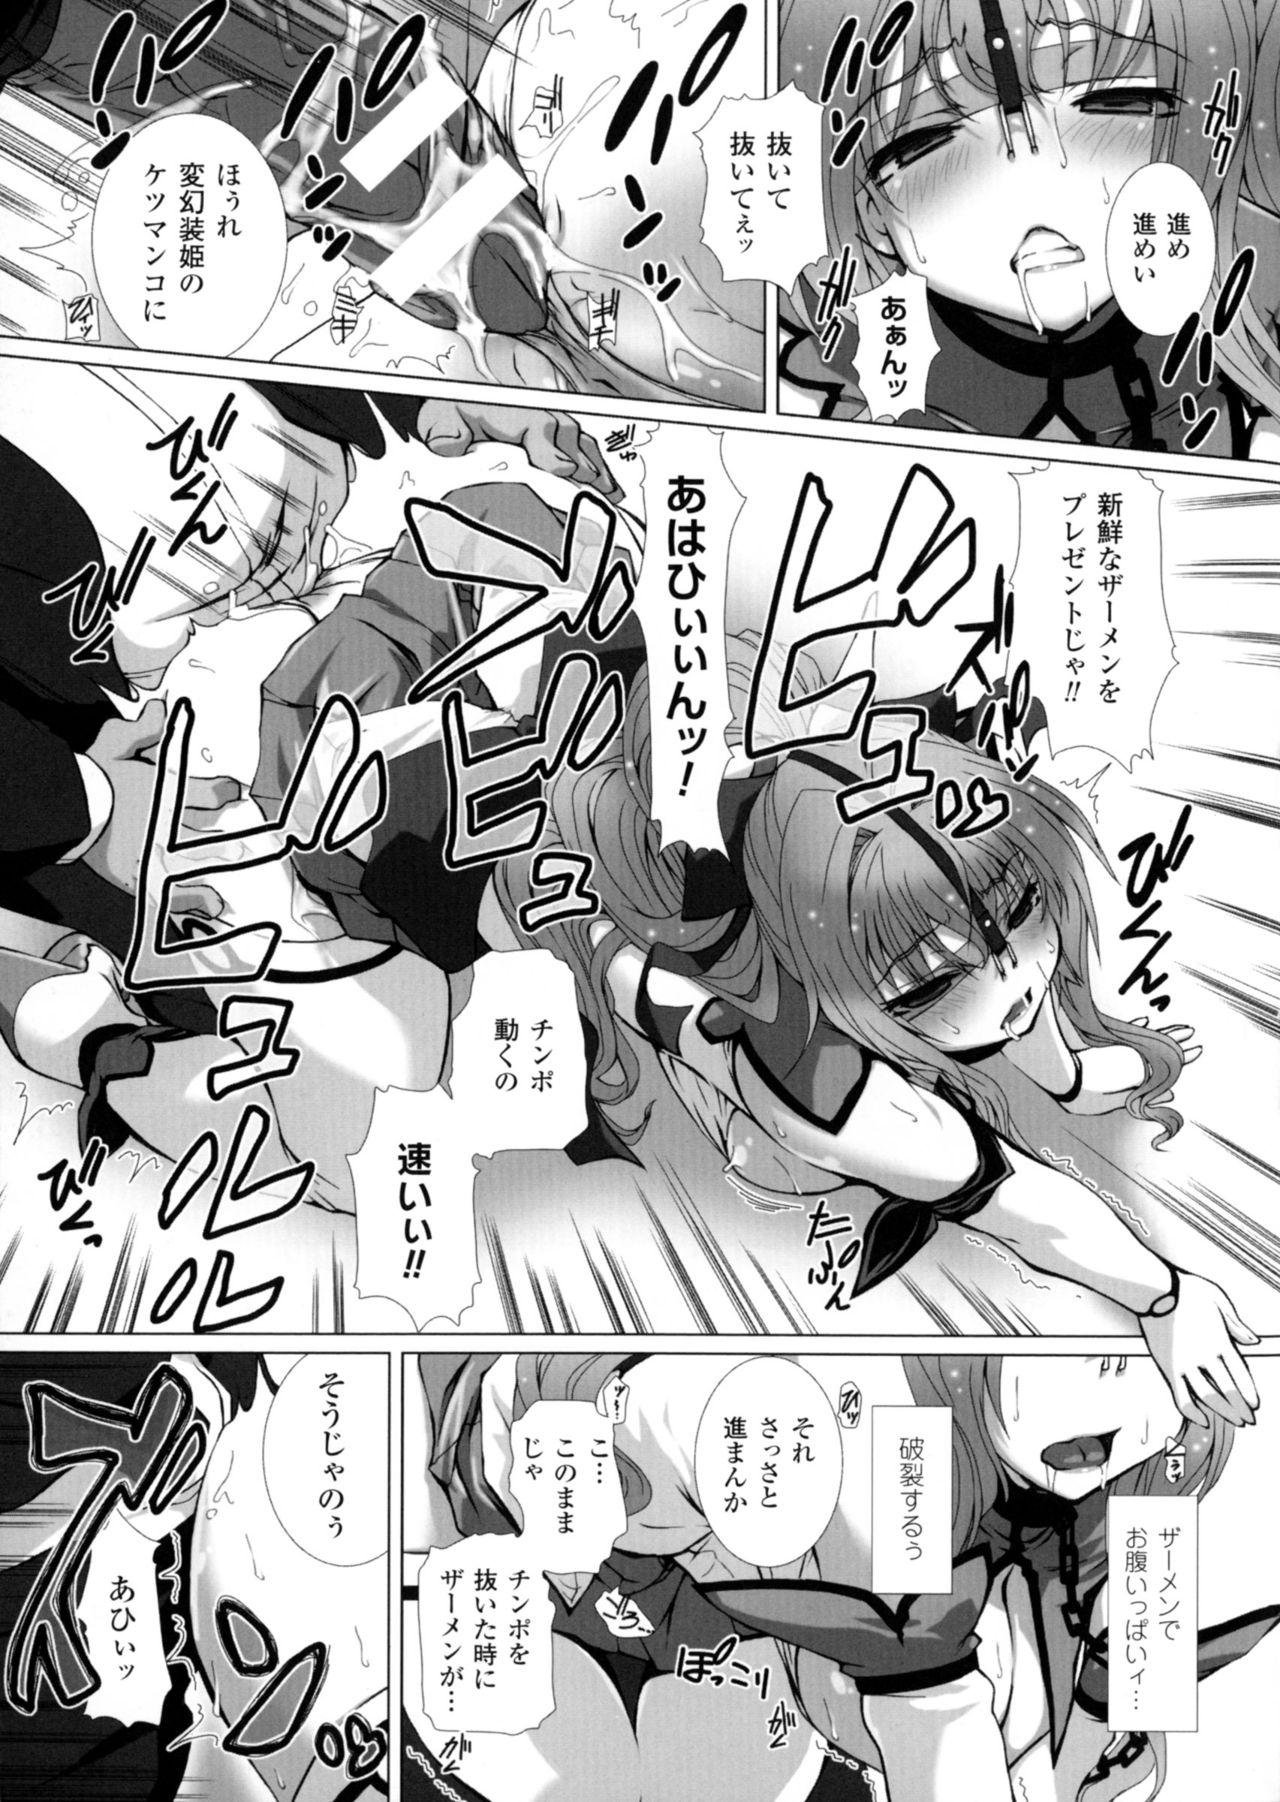 Seigi no Heroine Kangoku File DX Vol. 4 40